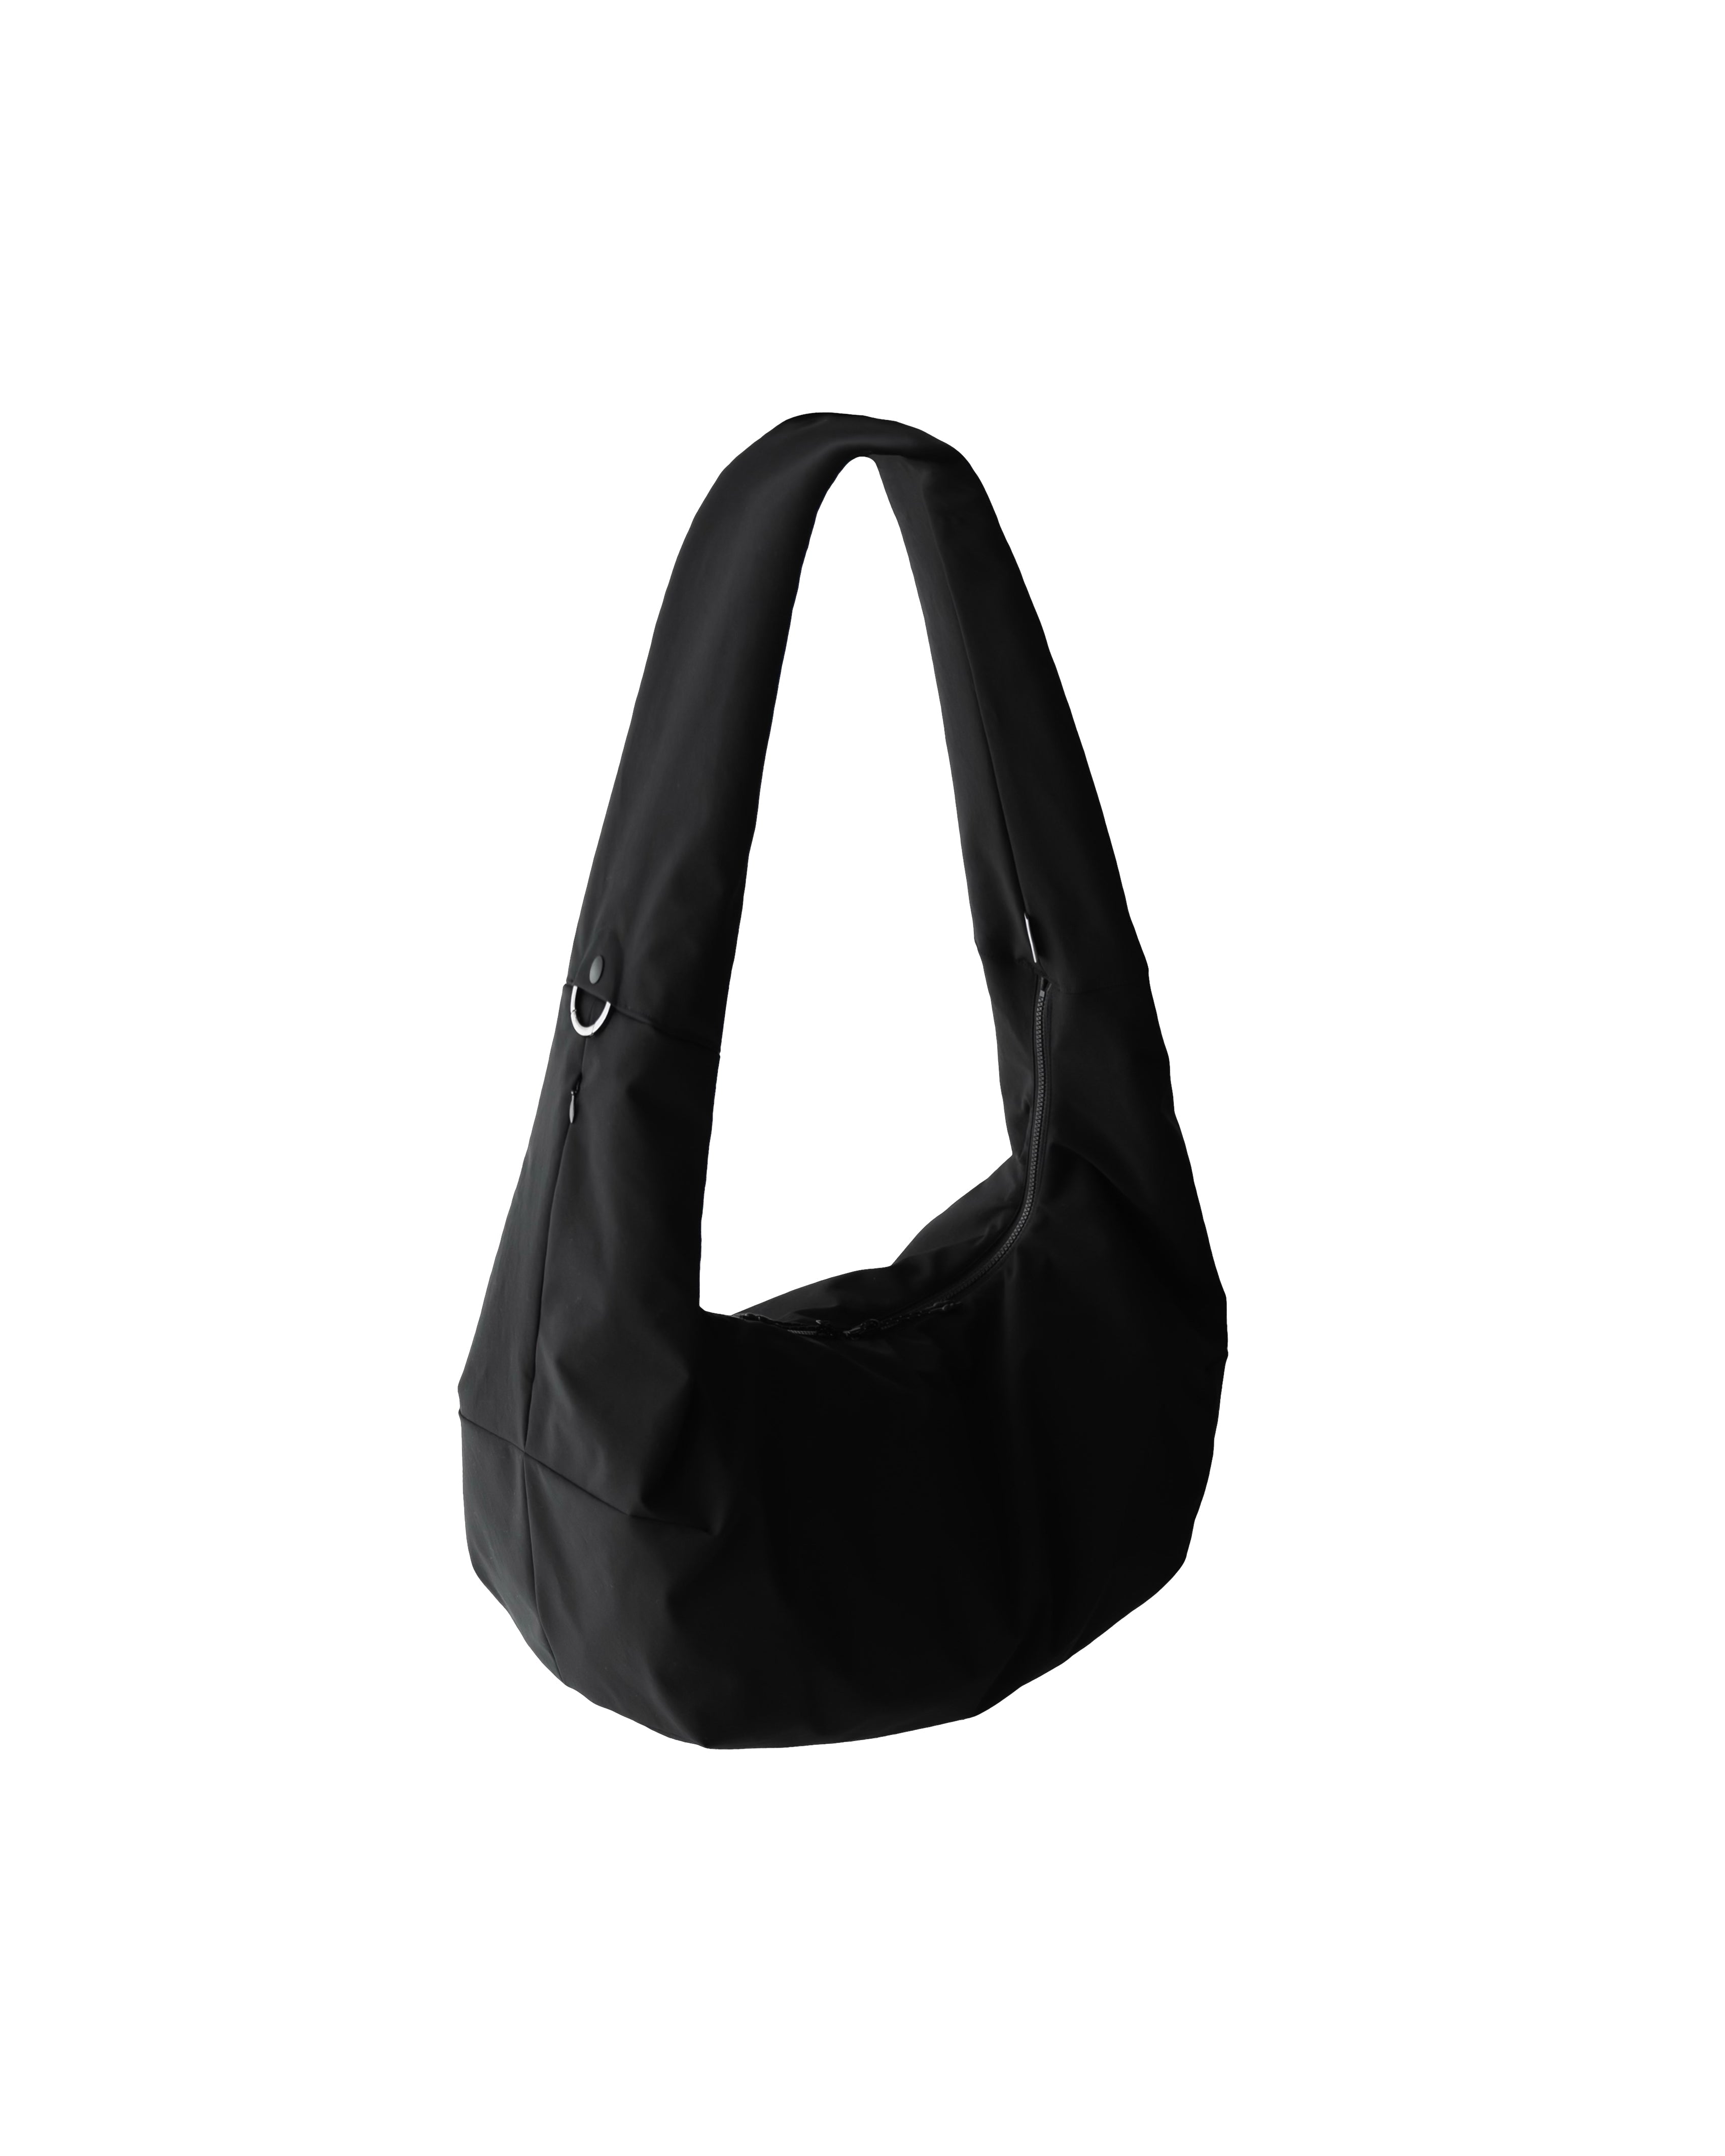 CLESSTE Everyday Bag(Black) - リュック/バックパック